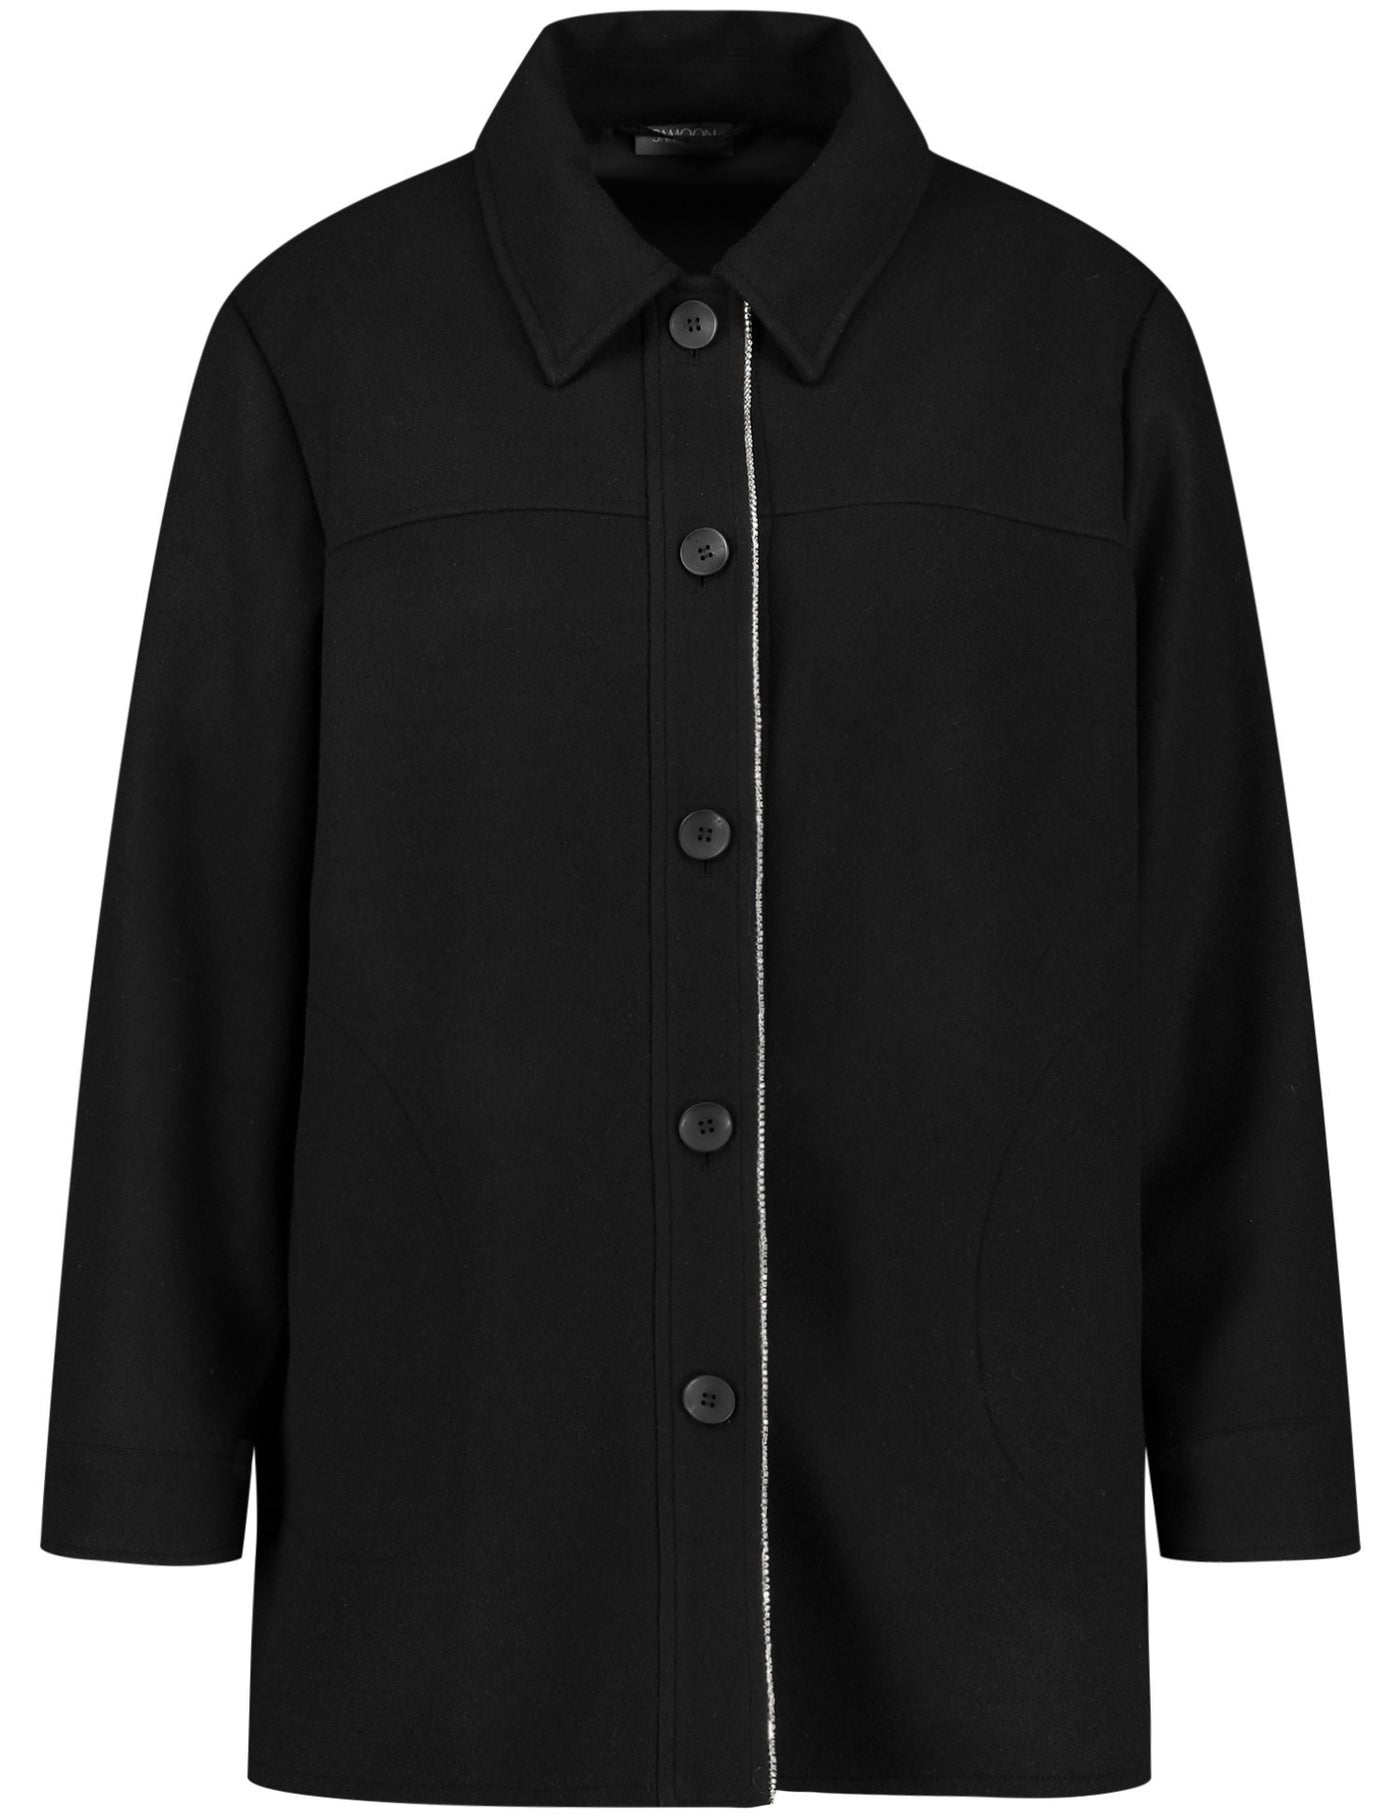 Samoon Shirt Jacket with Decorative Placket in Black